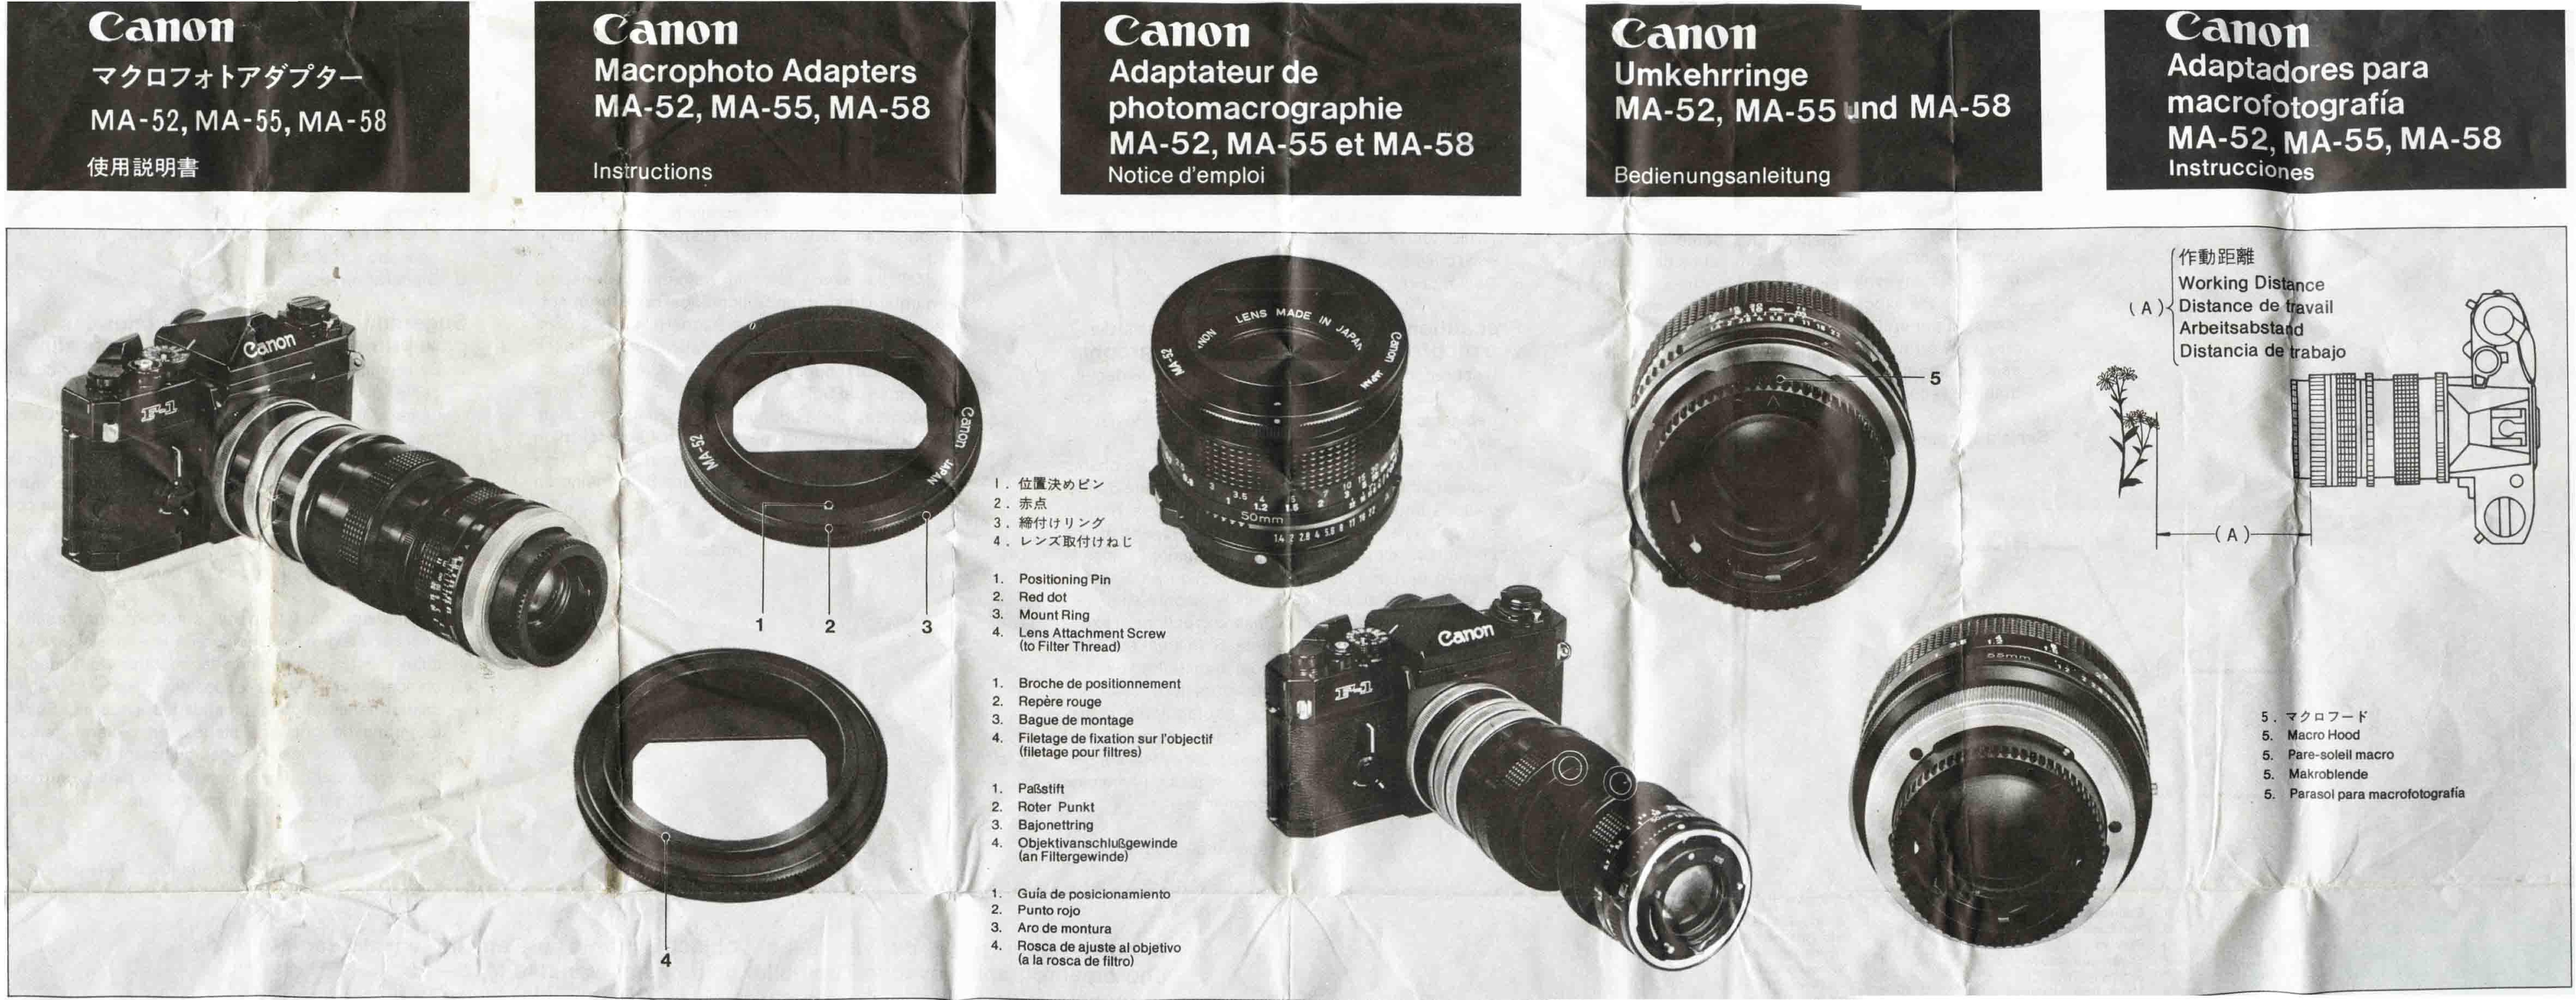 Canon MA-52 Network Card User Manual